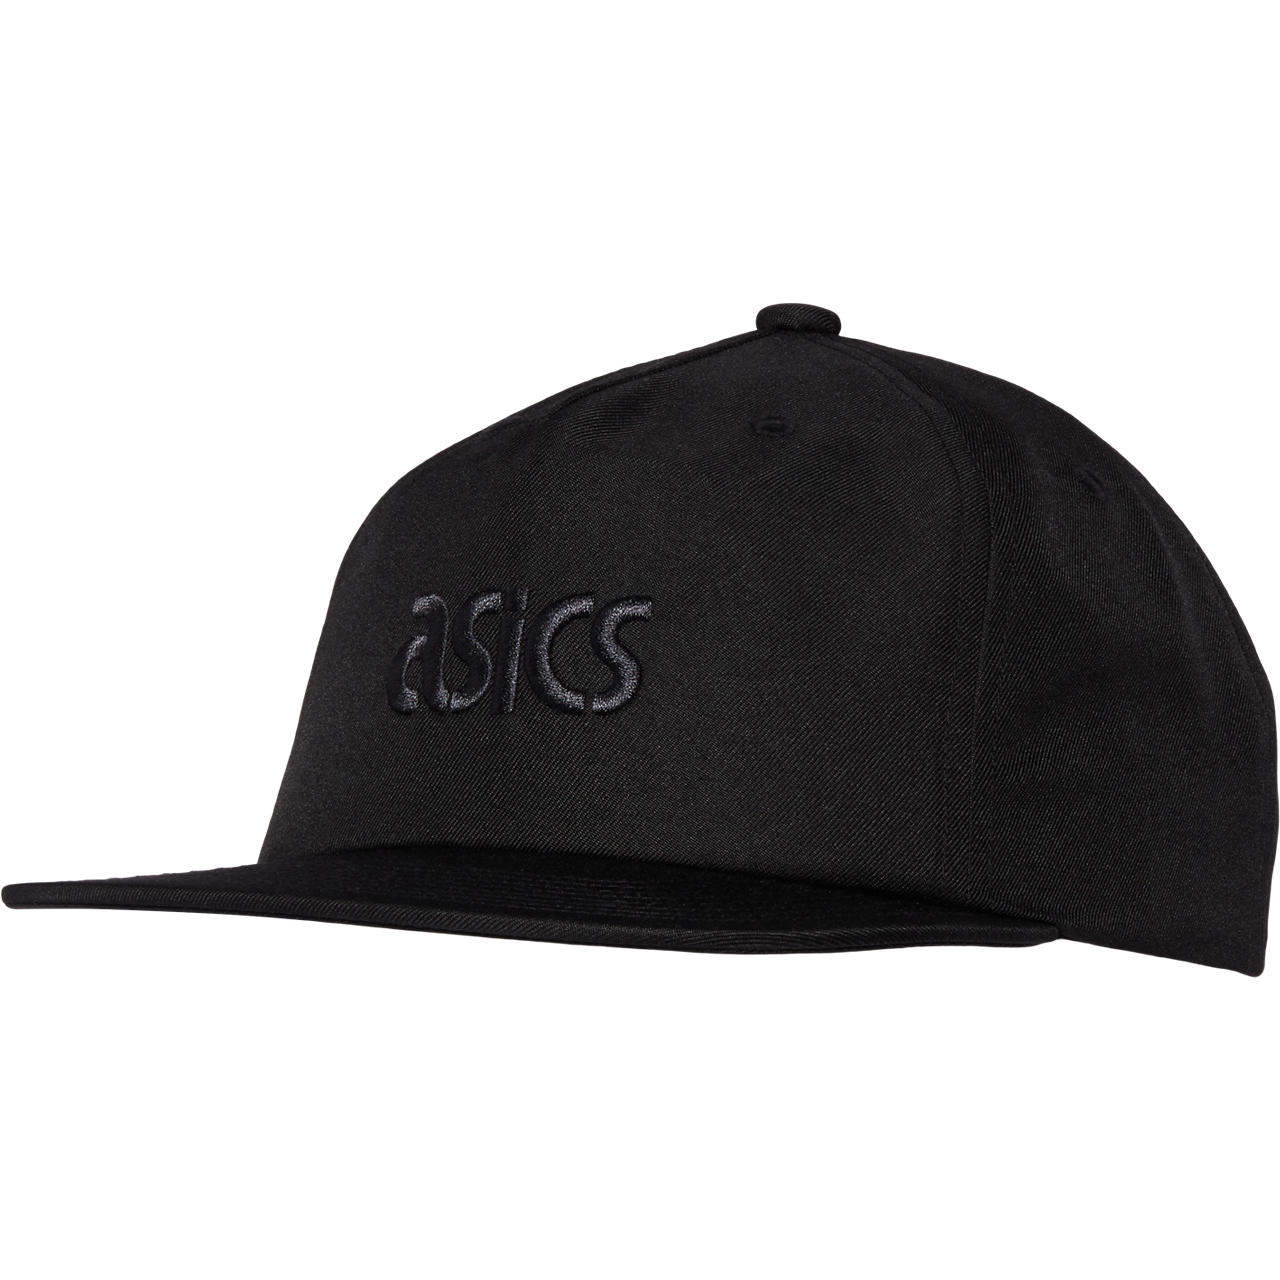 ASICS LOGO CAP